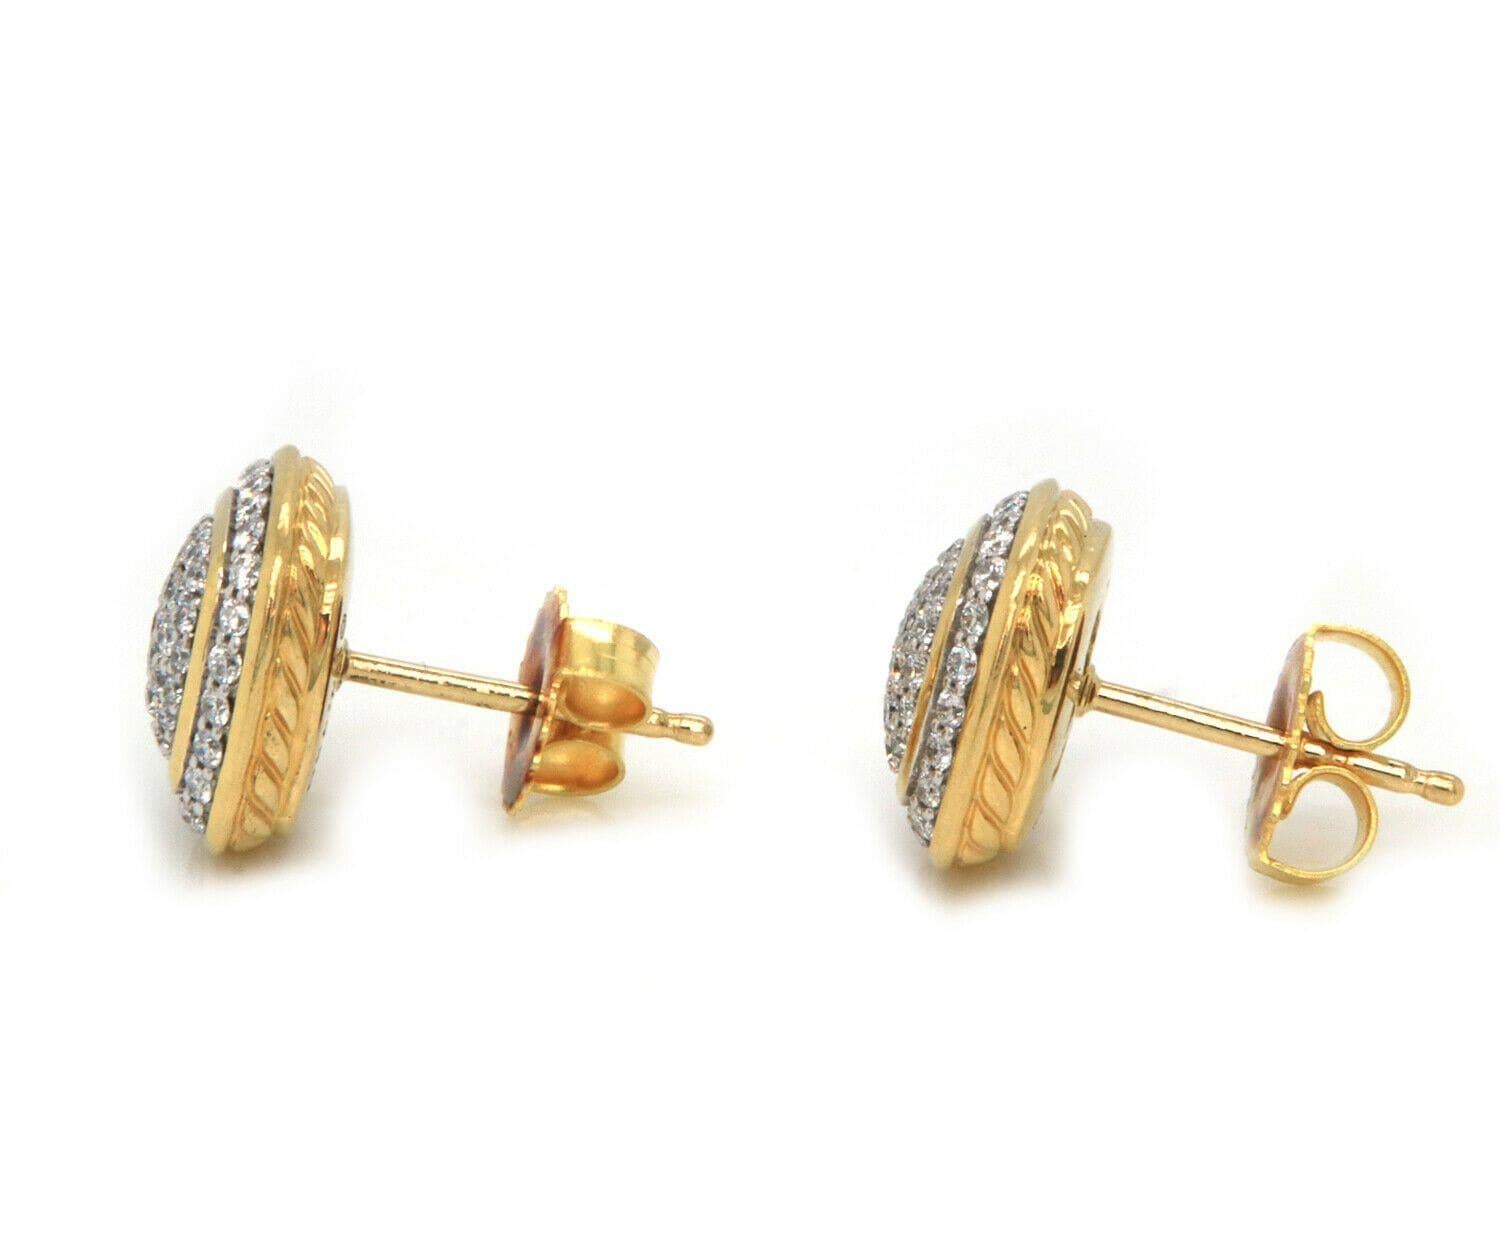 Round Cut David Yurman Albion Pave Diamond Earrings in 18K Yellow Gold For Sale